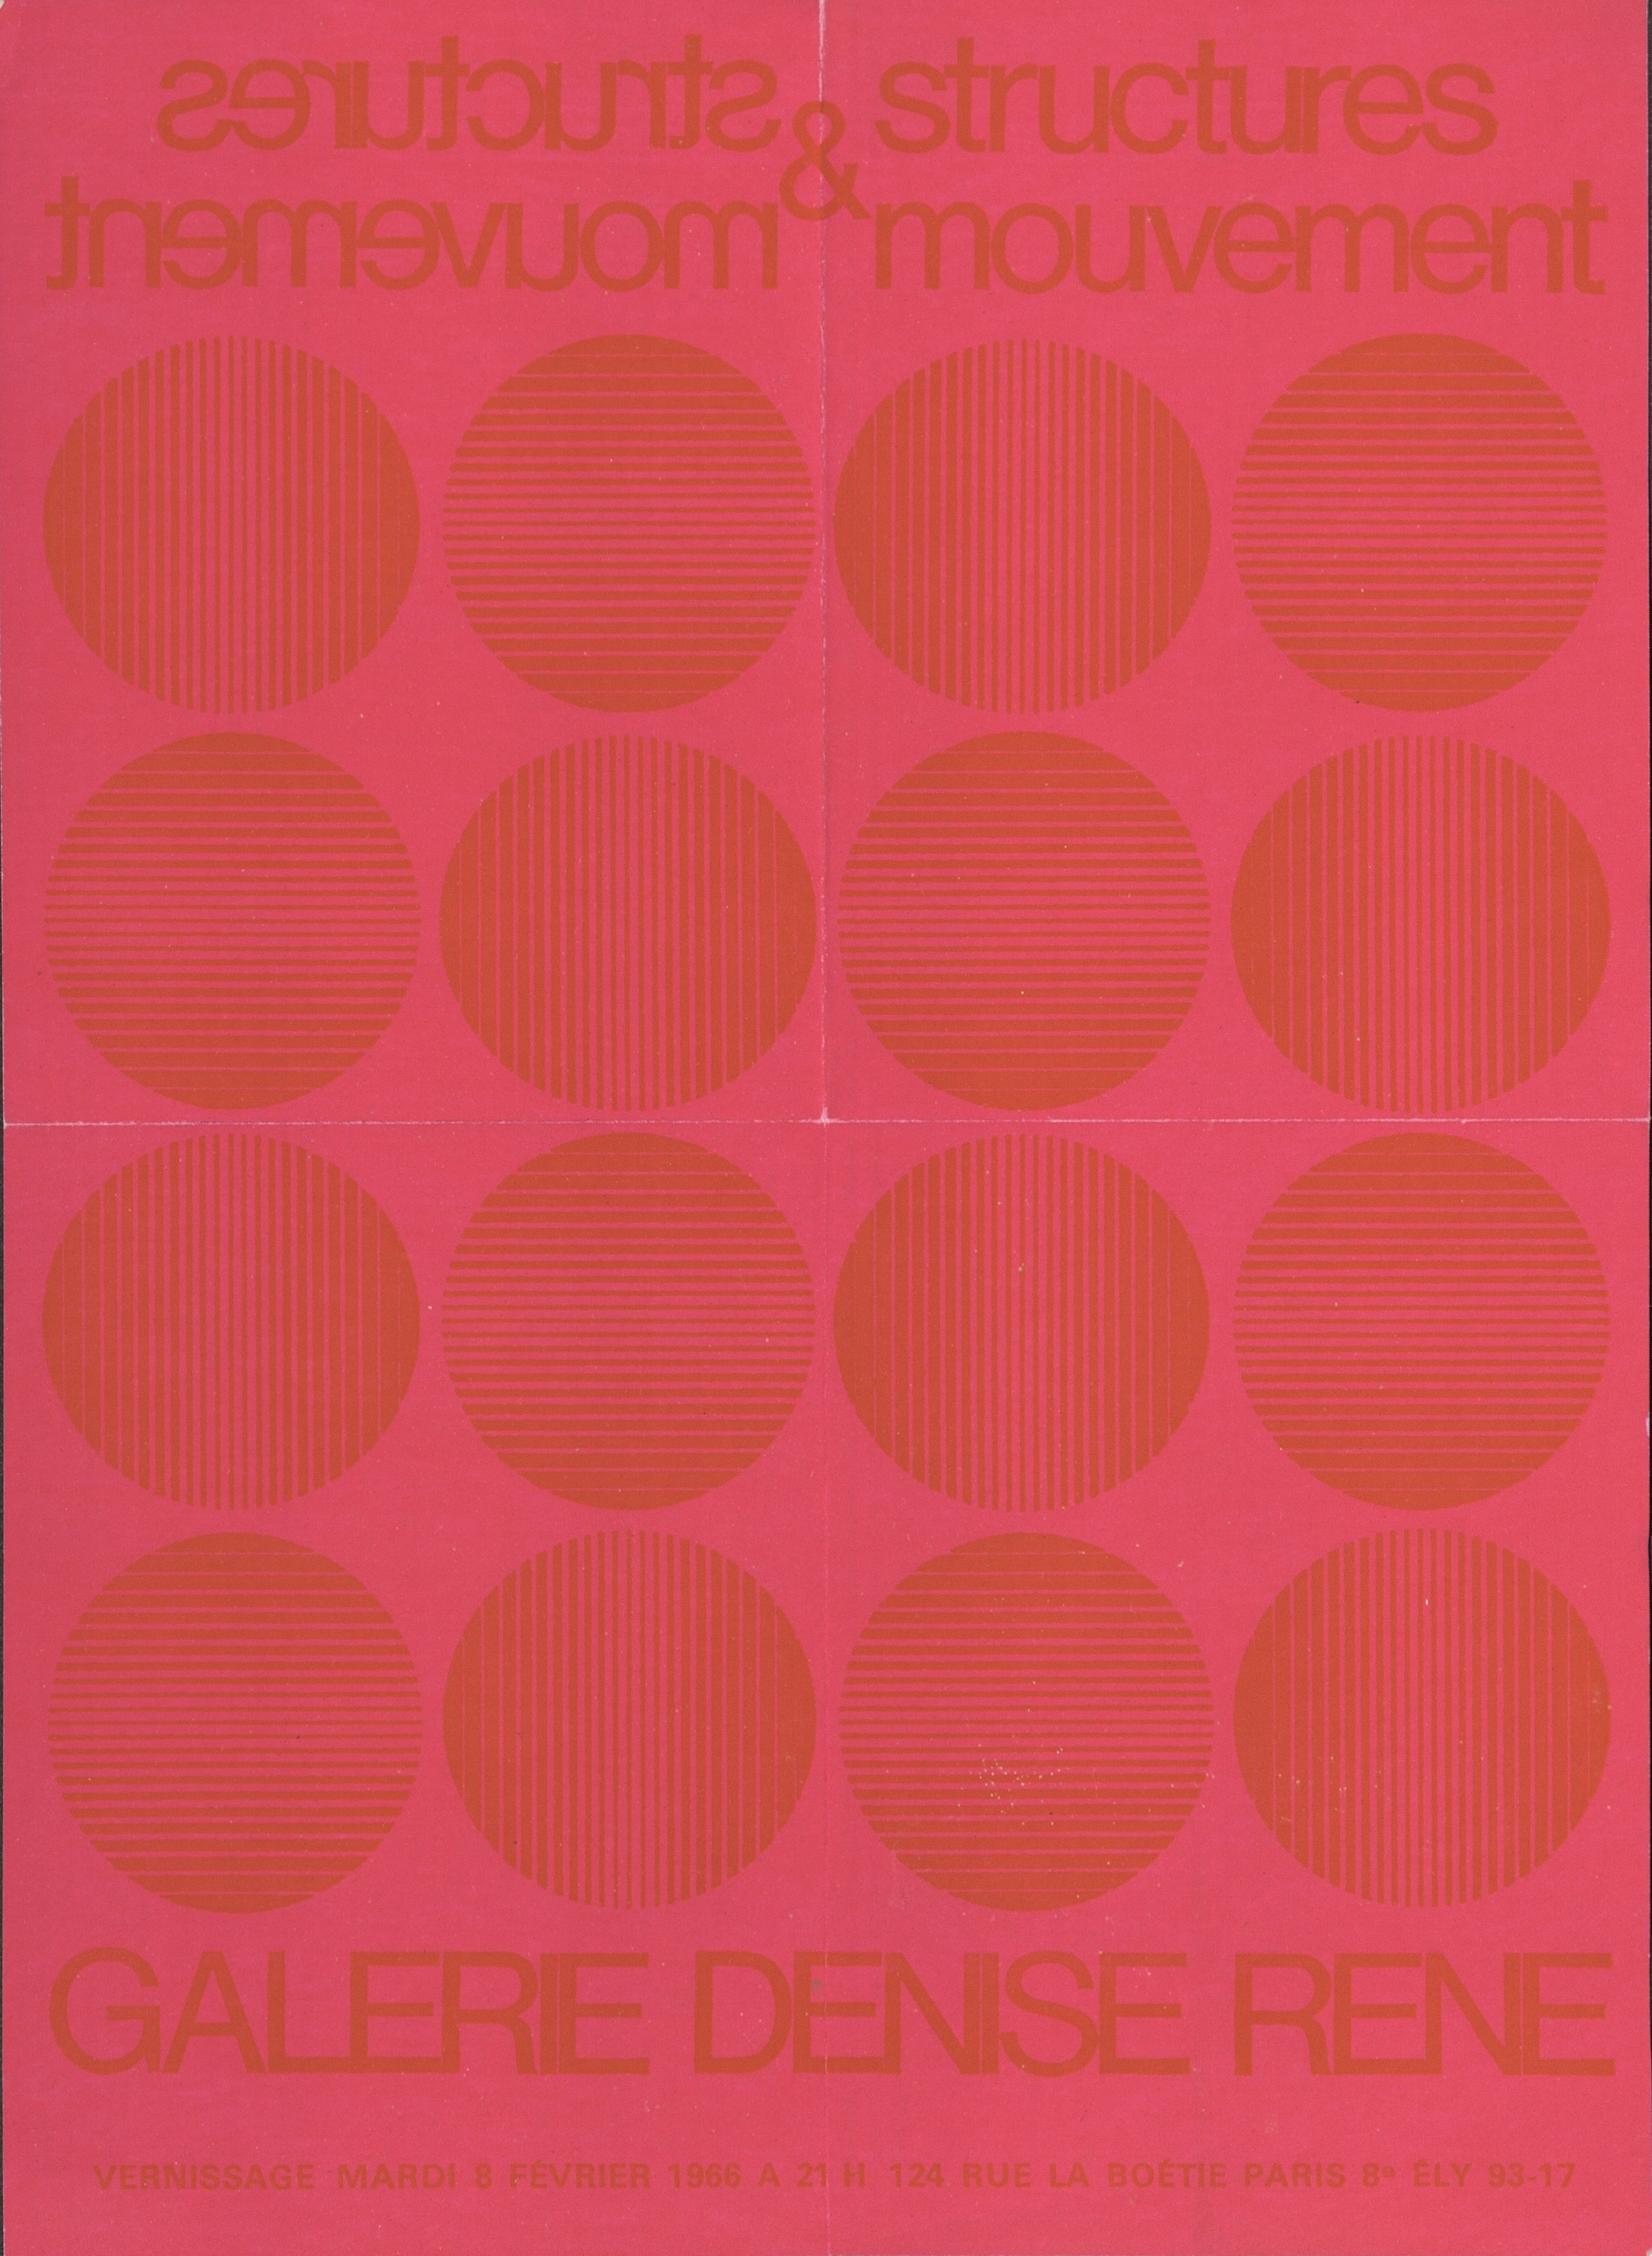 STRUCTURES AND MOUVEMENT, Galerie Denise René Hans Mayer, Paris 1966 (Invitation Poster); Archiv der Avantgarden, Staatliche Kunstsammlungen Dresden